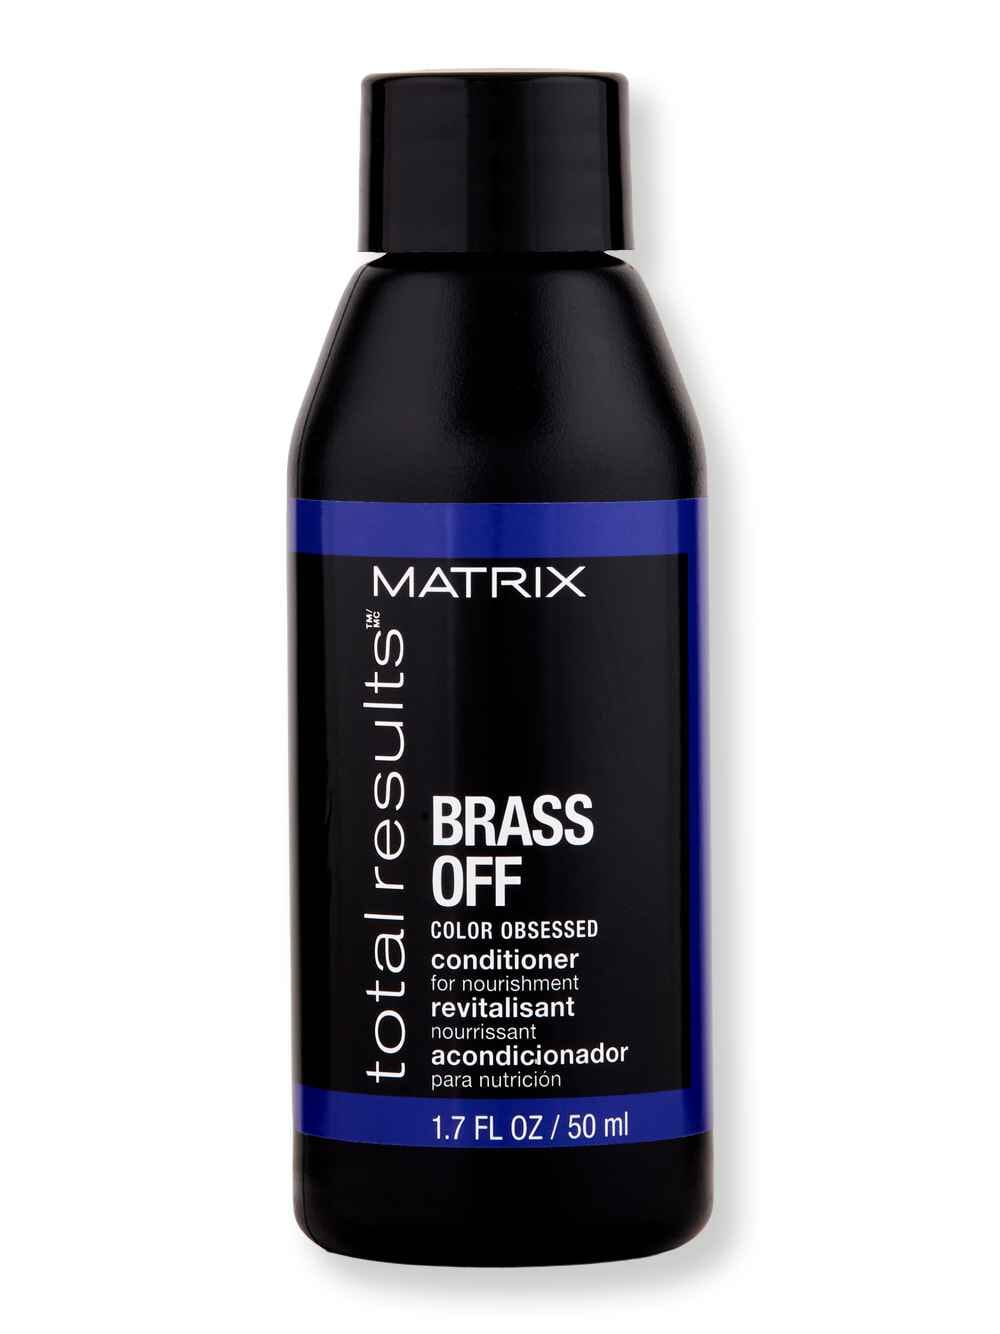 Matrix Matrix Total Results Brass Off Conditioner 1.7 oz50 ml Conditioners 